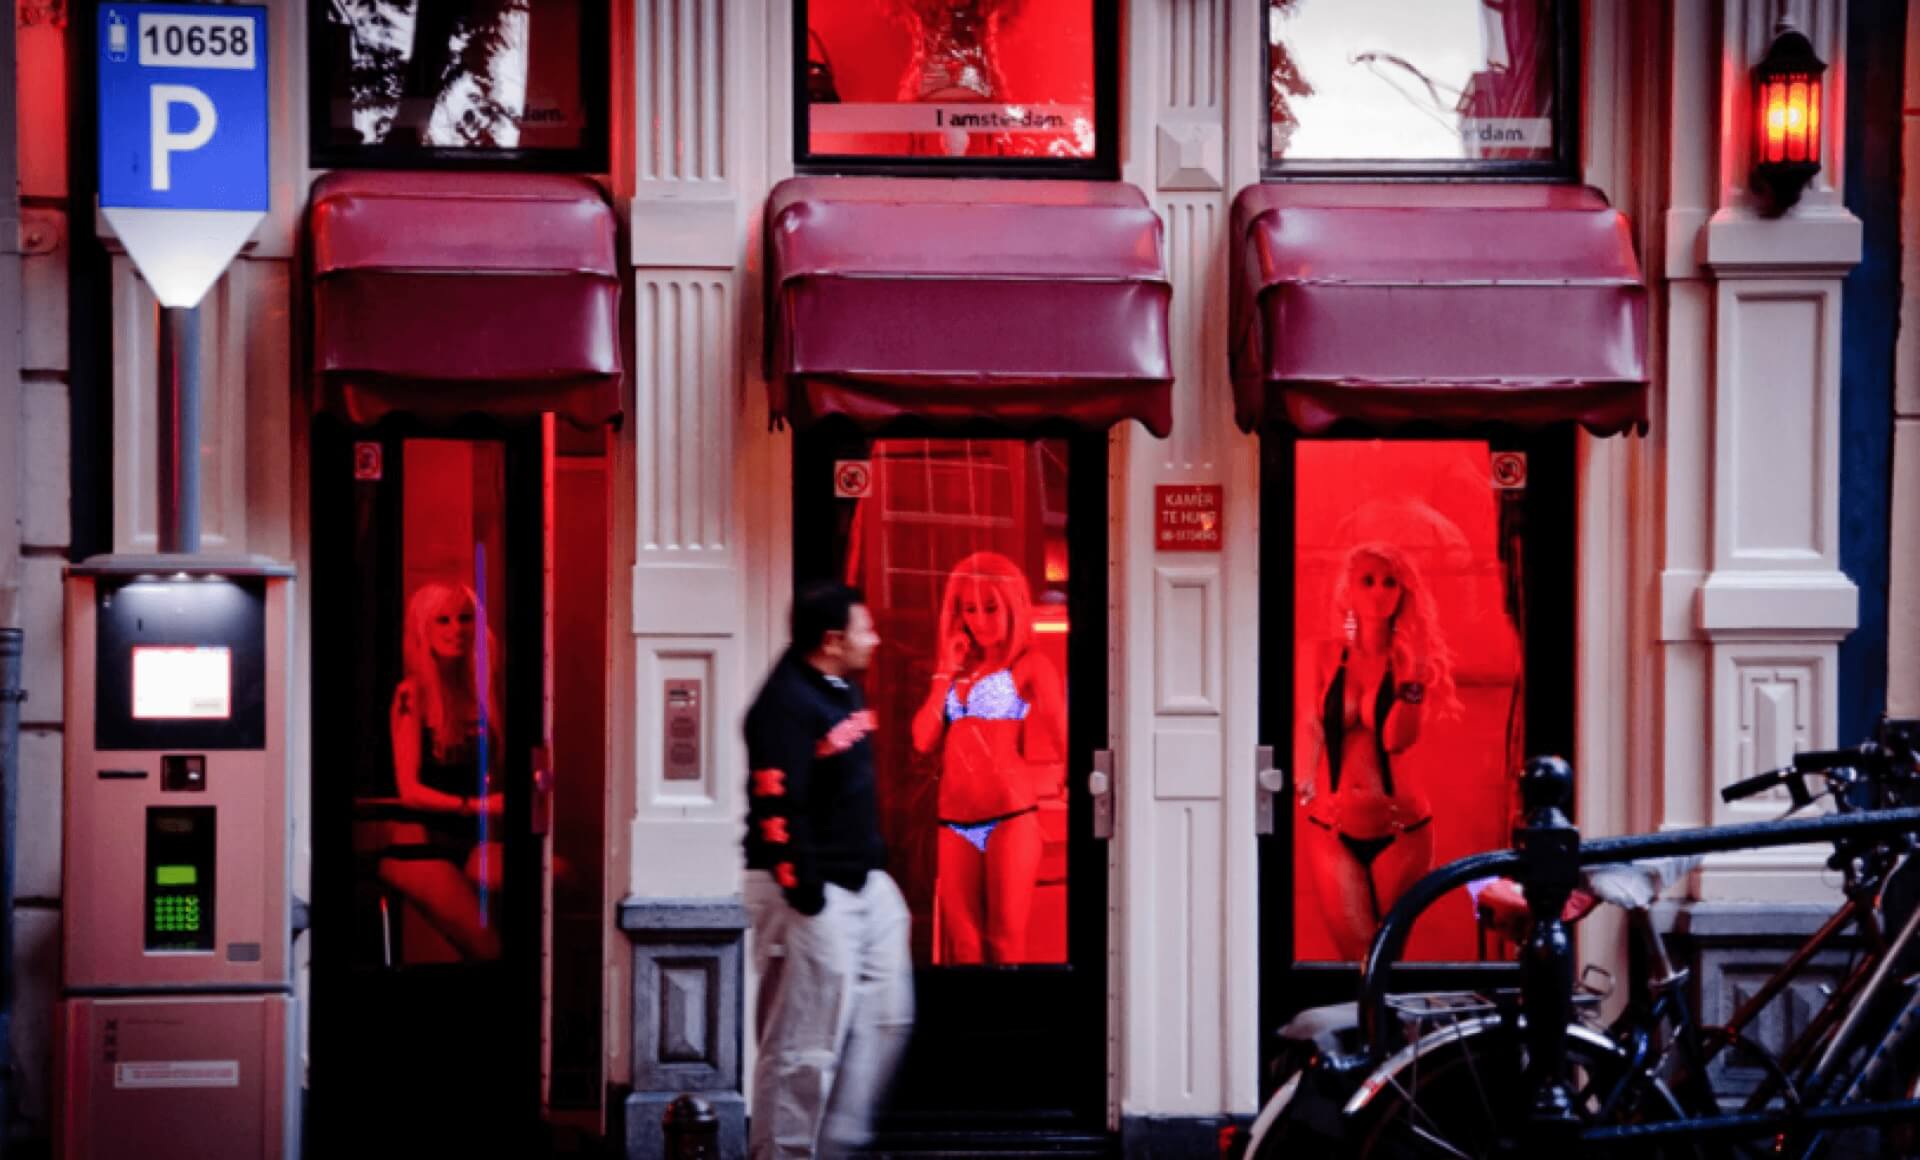 Red Light District i Amsterdam